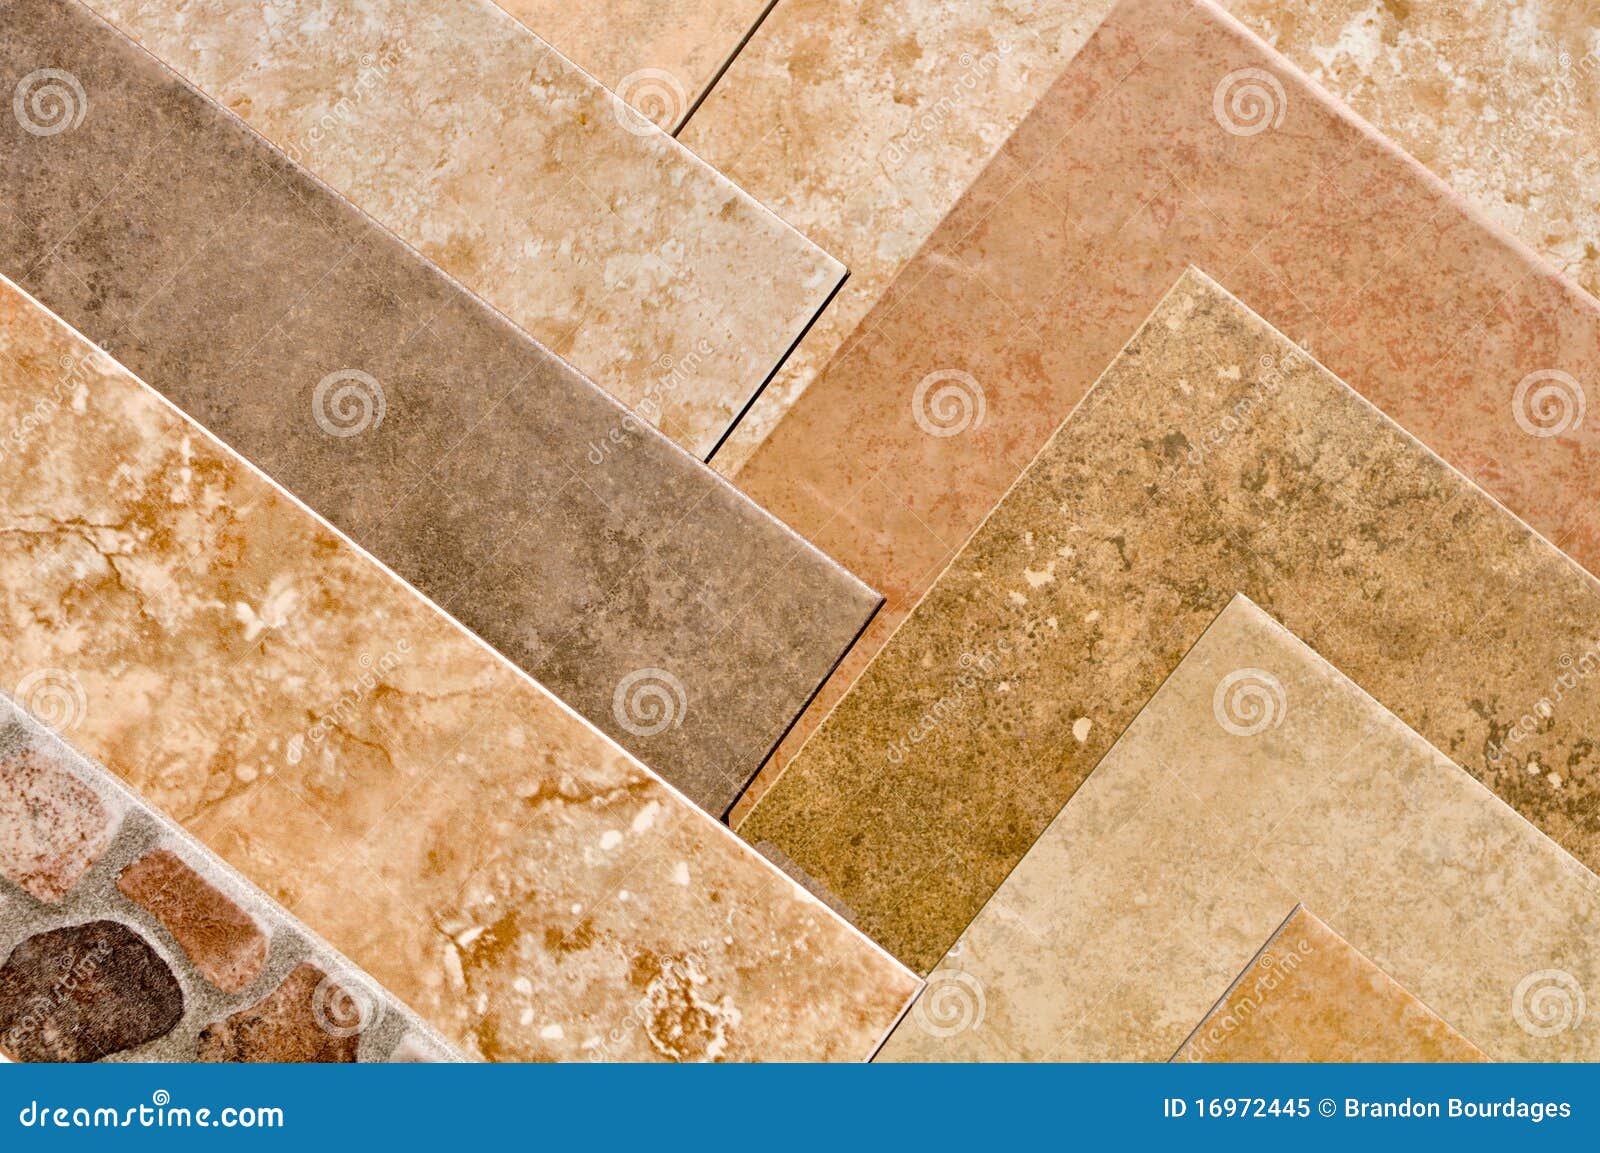 Tile Floor Sample Royalty Free Stock Photo - Image: 16972445